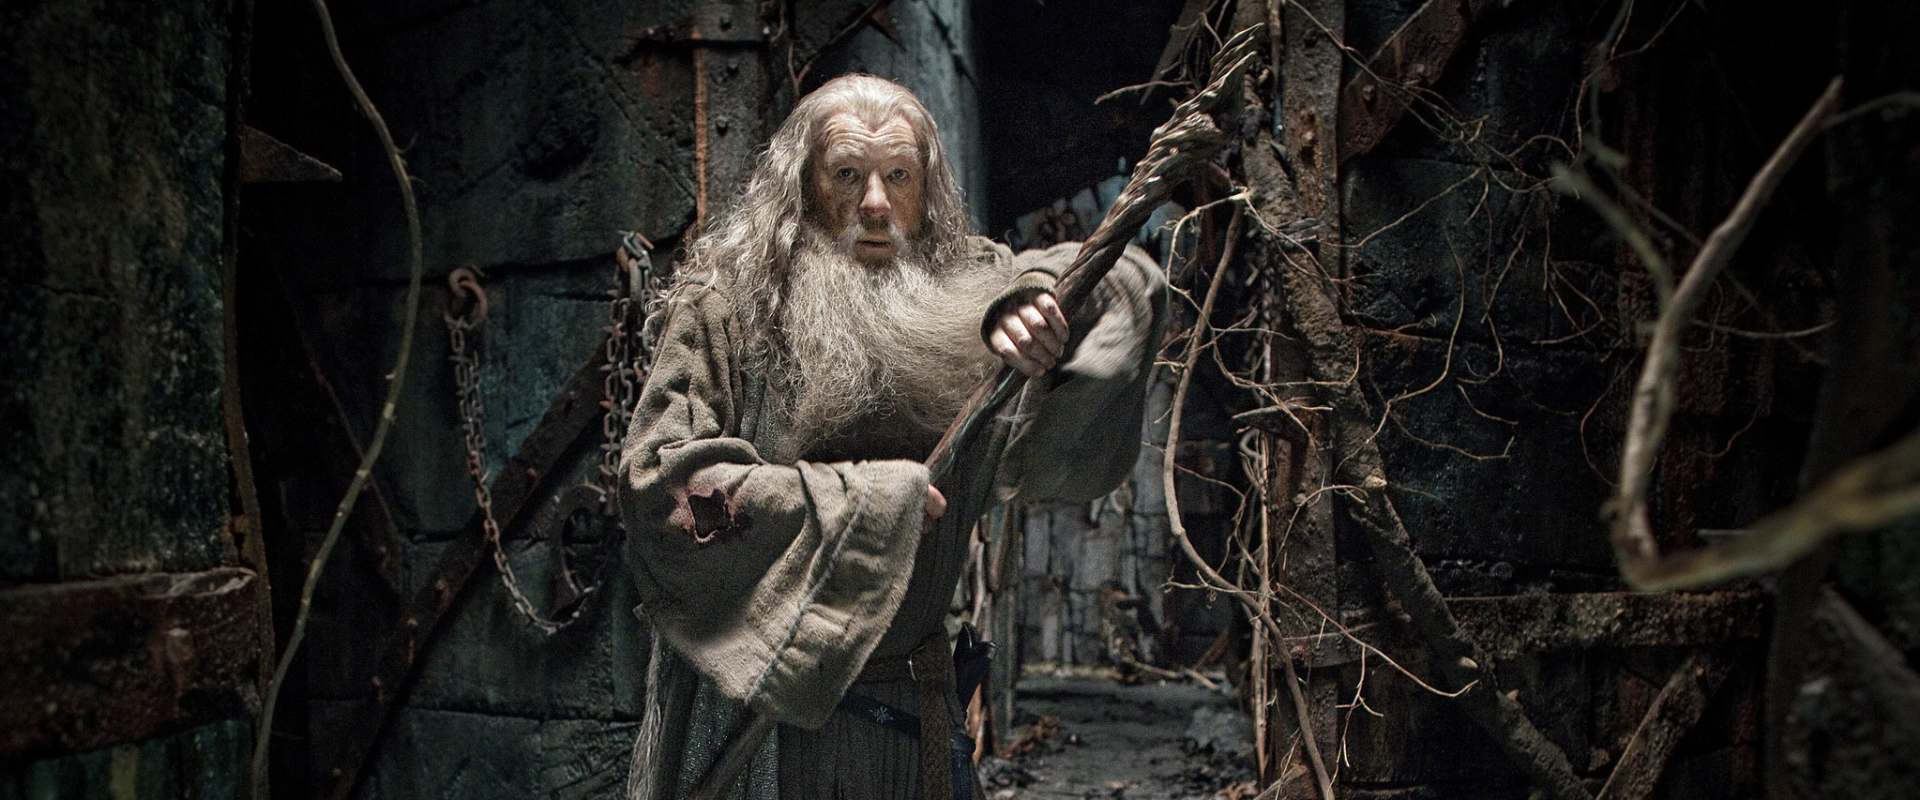 The Hobbit: The Desolation of Smaug background 1